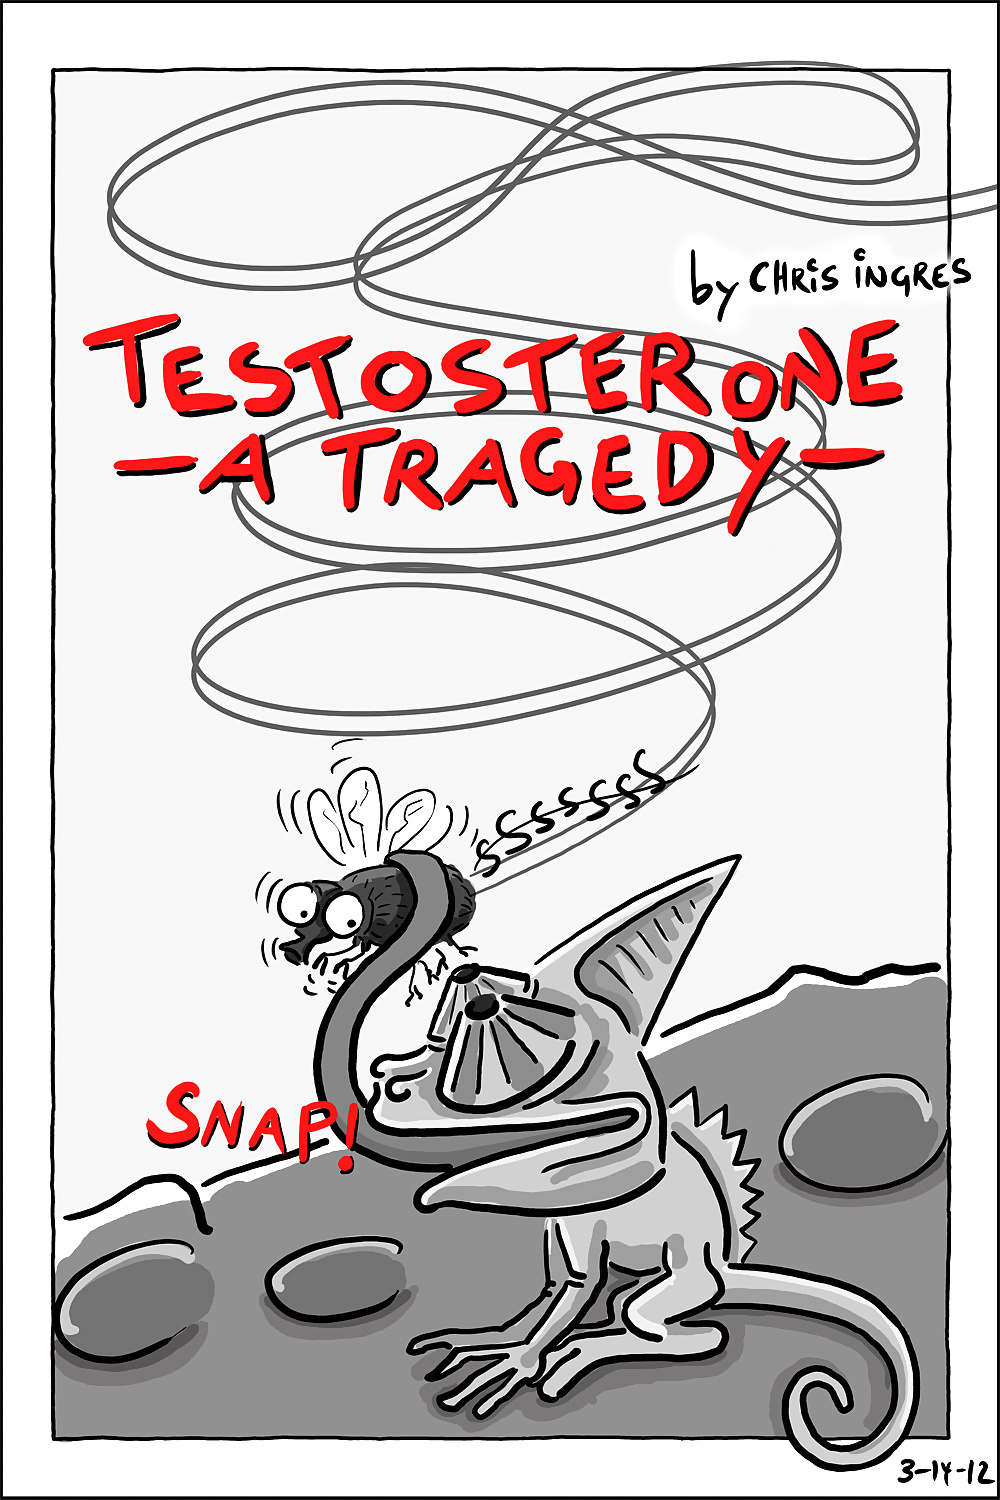 TESTOSTERONE - A TRAGEDY.3rd cartoon by chris ingres:) . #7957990